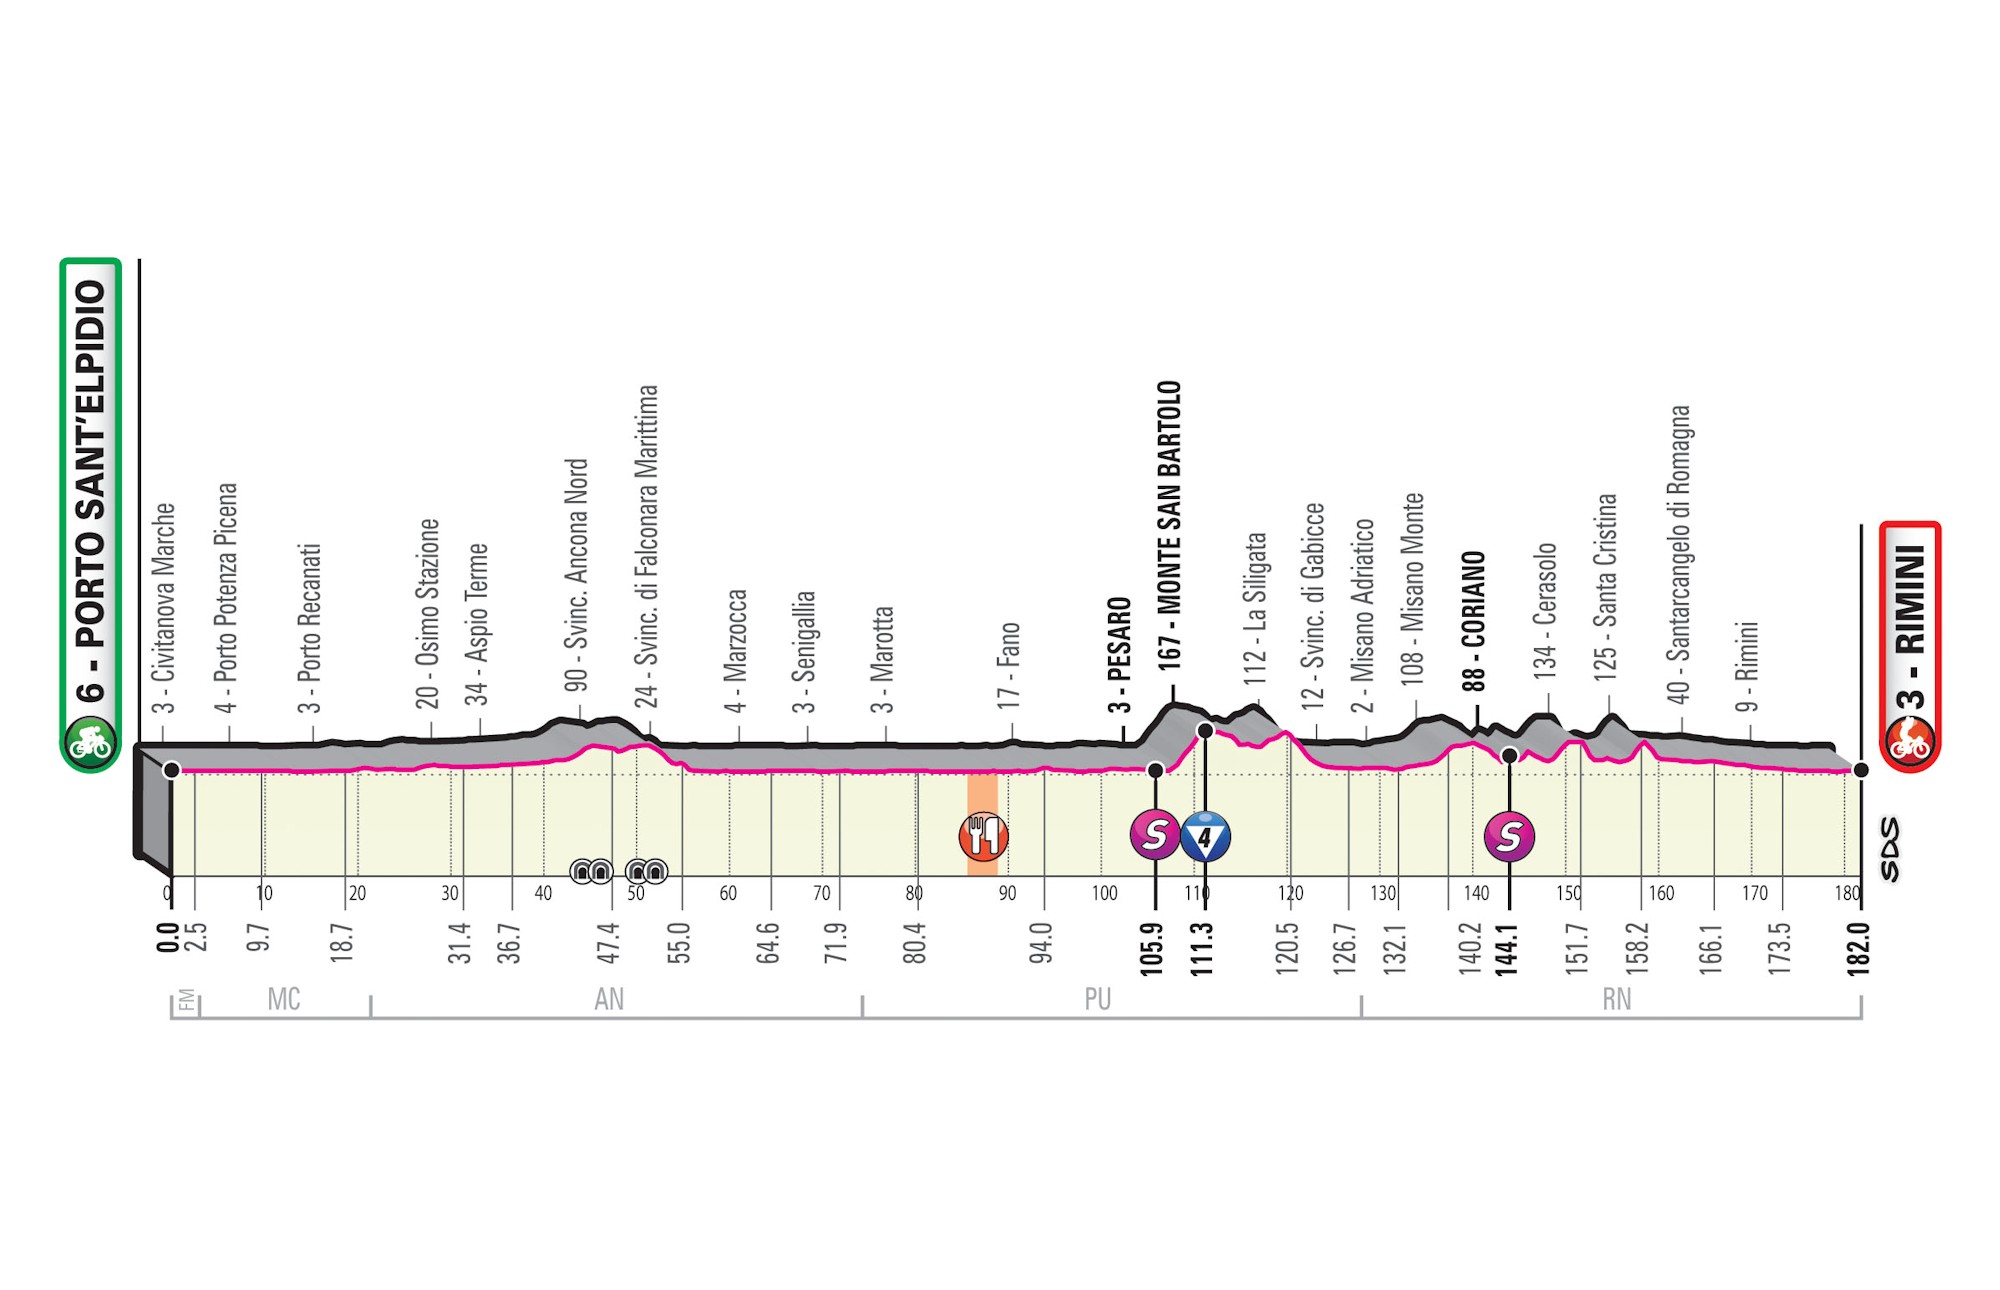 Giro d’Italia 2020: etap 11 – przekroje/mapki